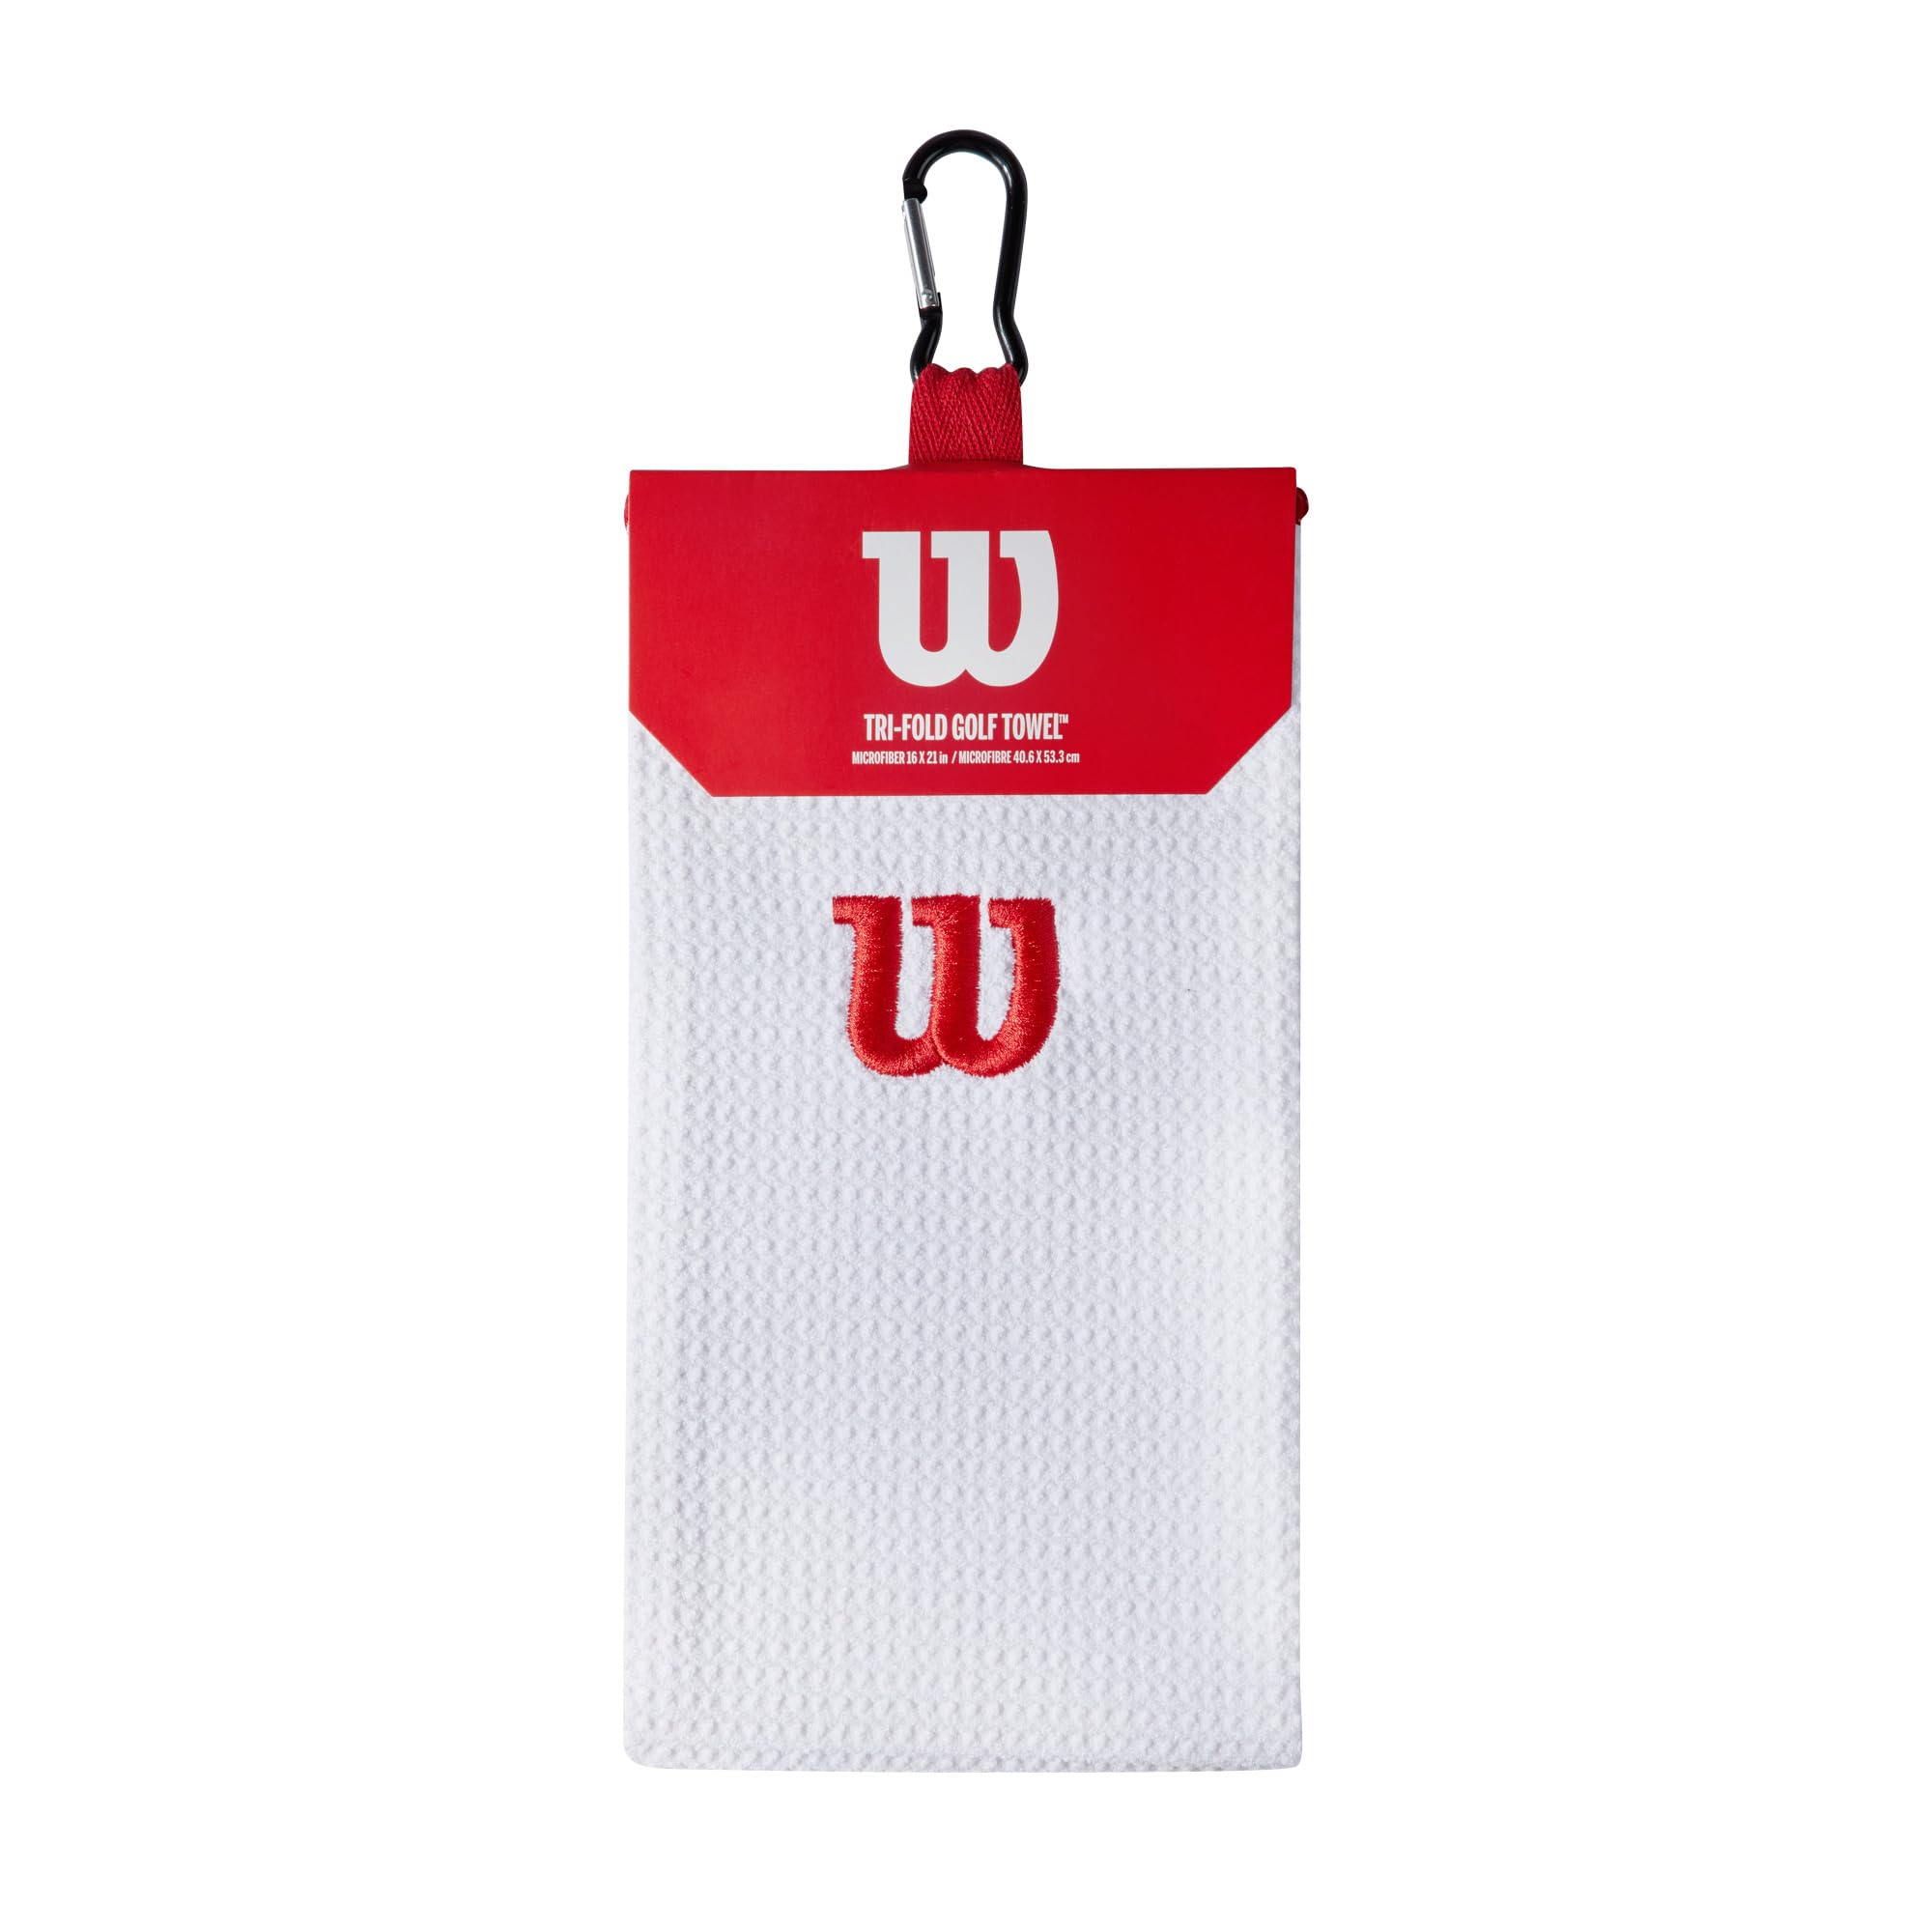 Wilson Microfiber Towel (White, 36"x16") $5.10 + Free Shipping w/ Prime or on $35+